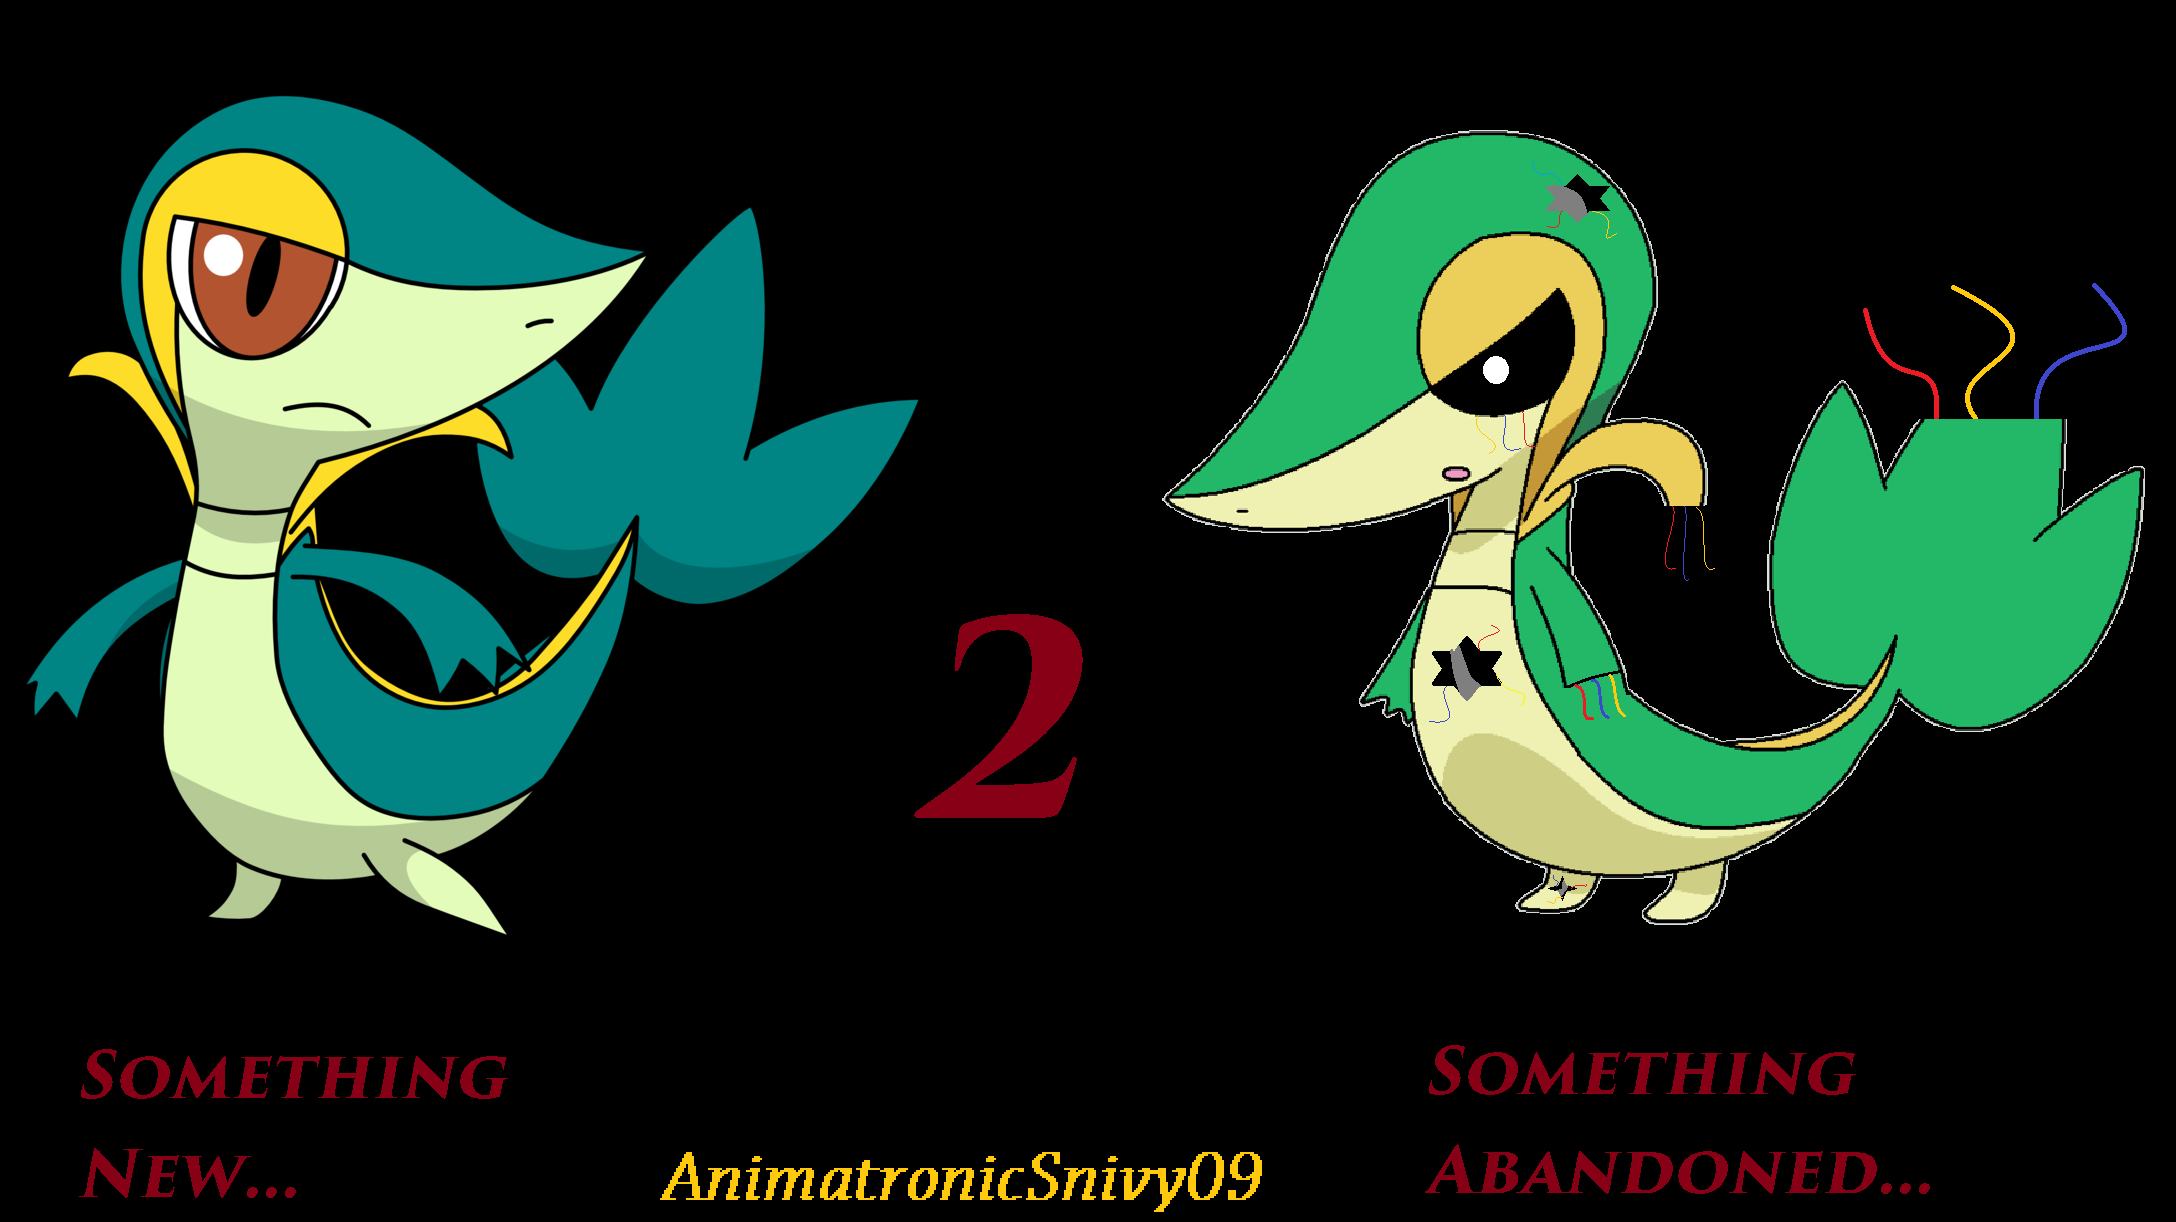 Fnaf 7 Animatronics Pokemon by matheusmattos75 on DeviantArt